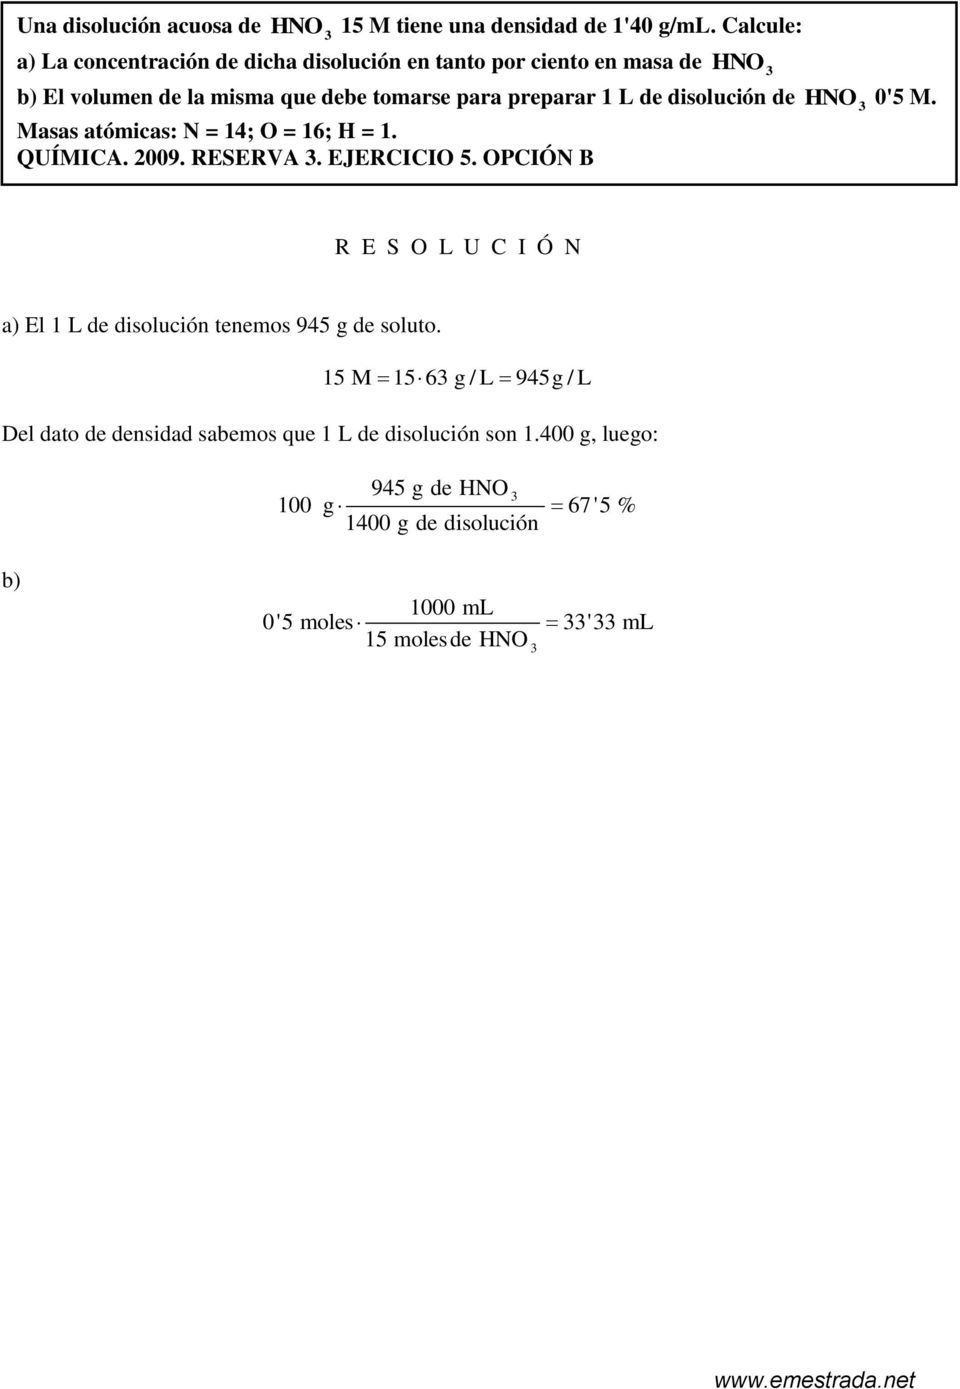 1 L de disolución de HNO 0'5 M. Masas atómicas: N = 14; O = 16; H = 1. QUÍMICA. 009. RESERVA. EJERCICIO 5.